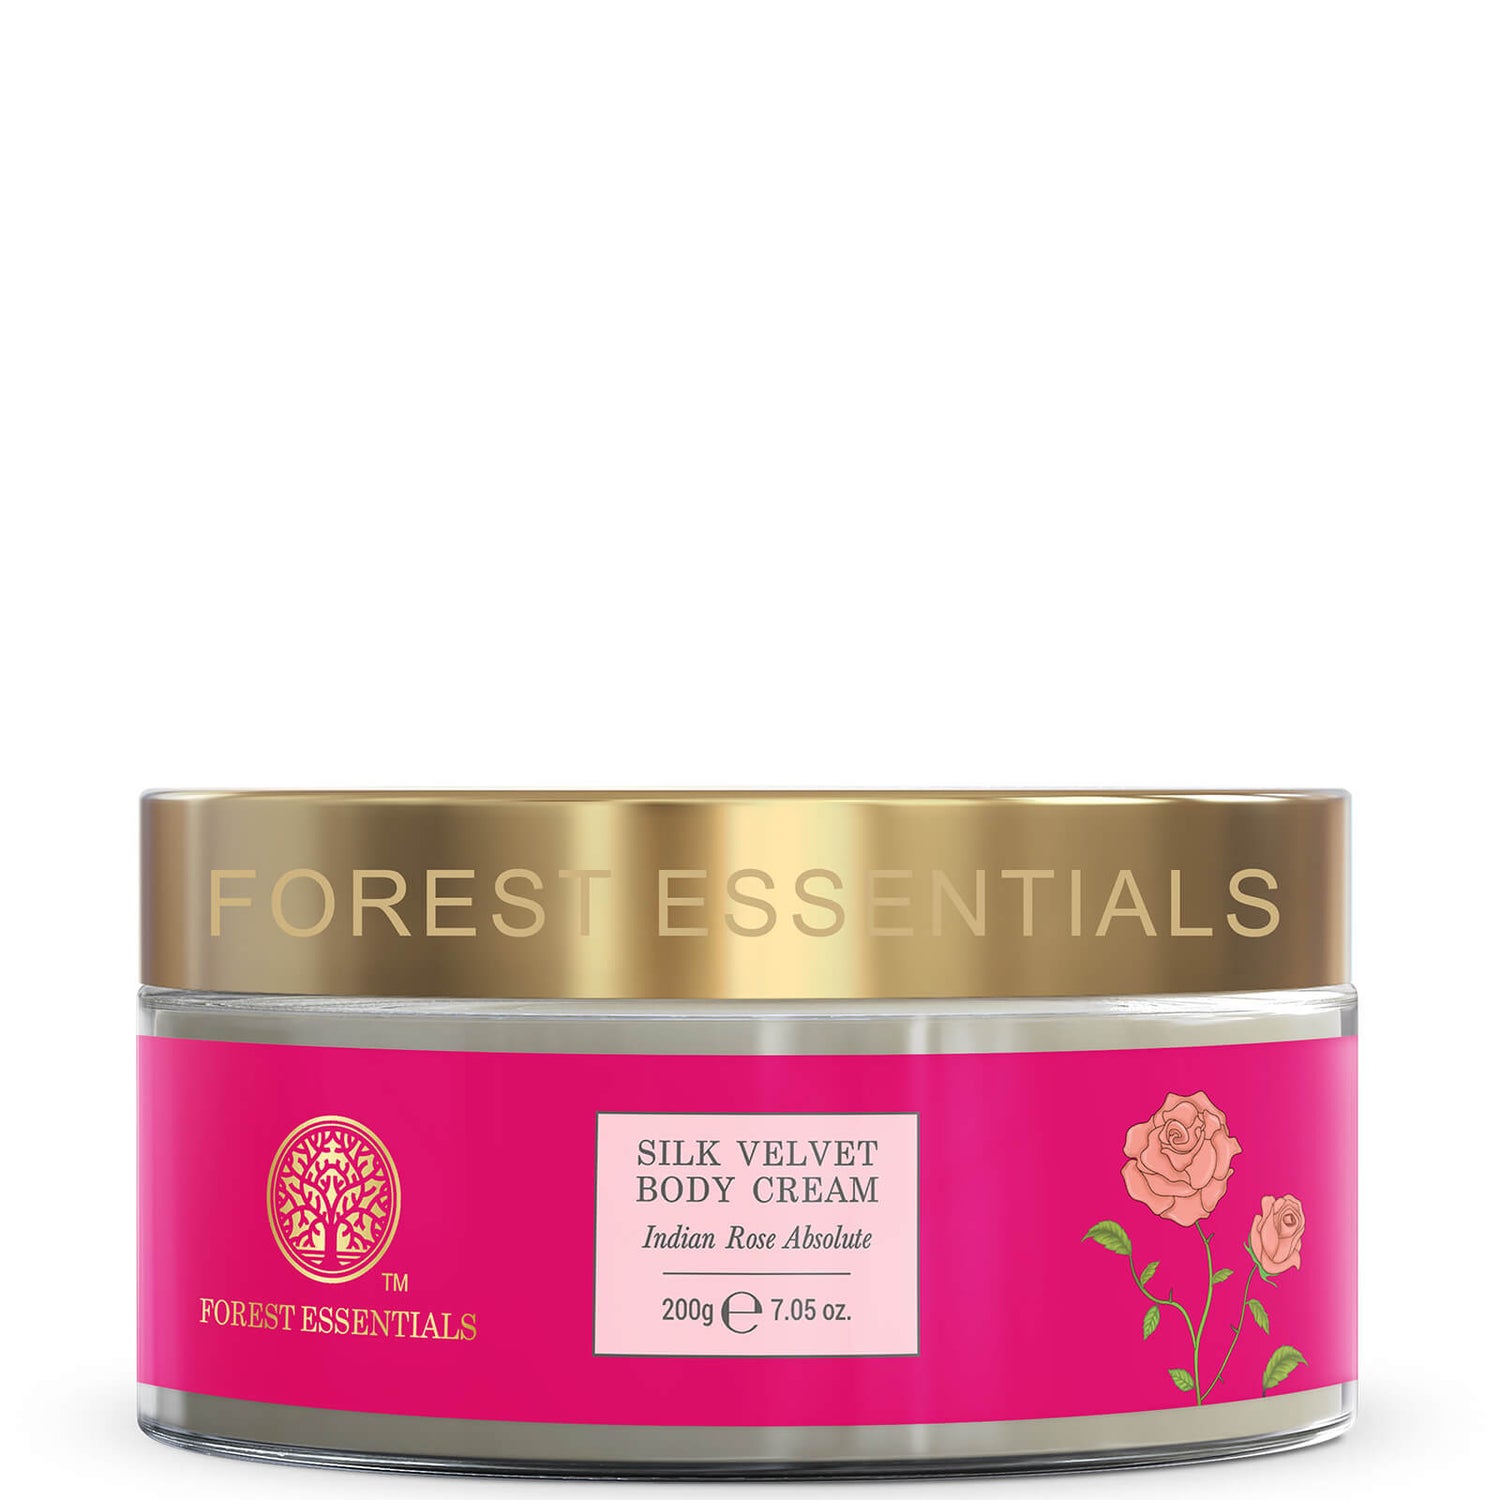 Forest Essentials Silk Velvet Body Cream - Indian Rose Absolute 200g